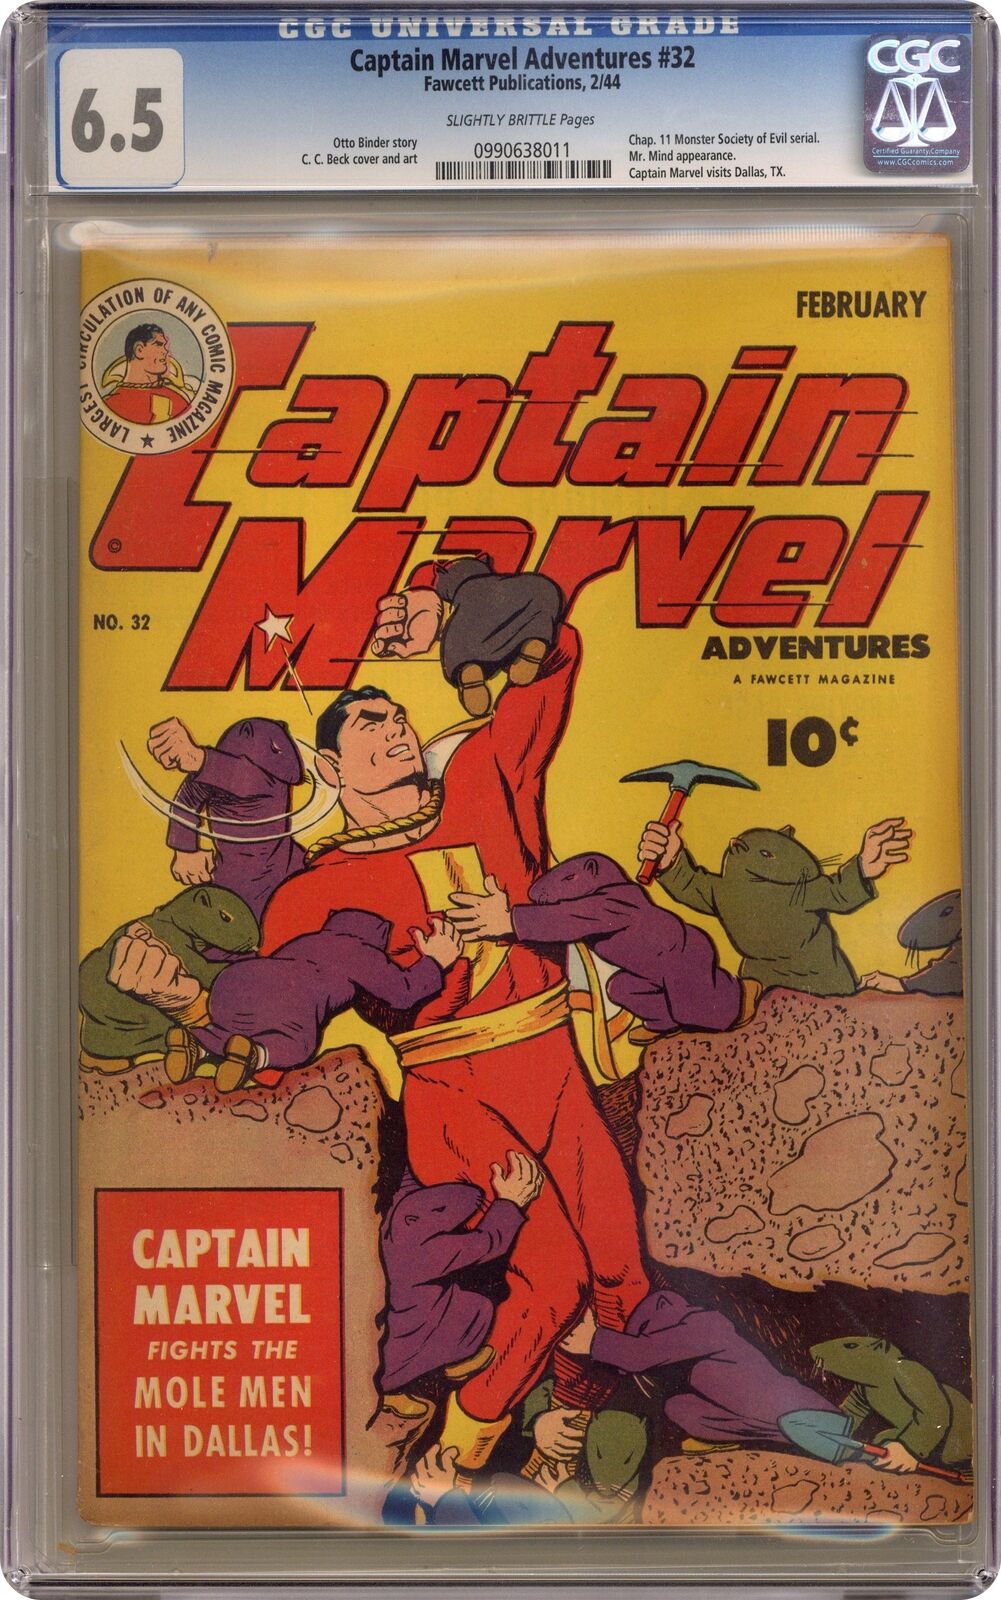 Captain Marvel Adventures #32 CGC 6.5 1944 0990638011